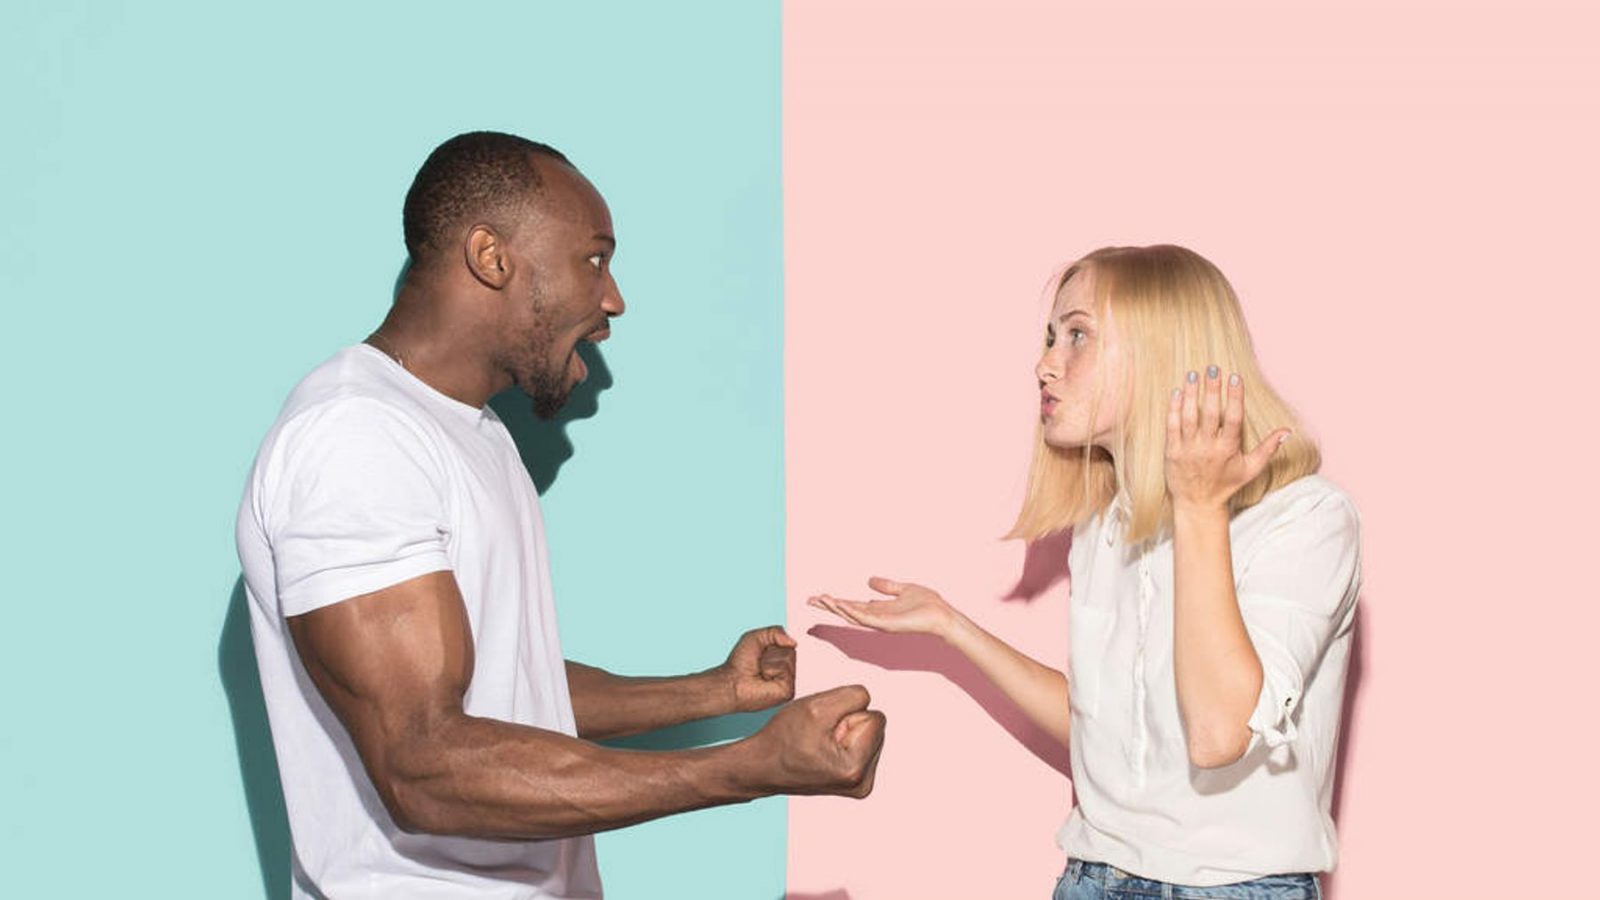 How Compatible Are We? Argument Quarrel Conflict Fight